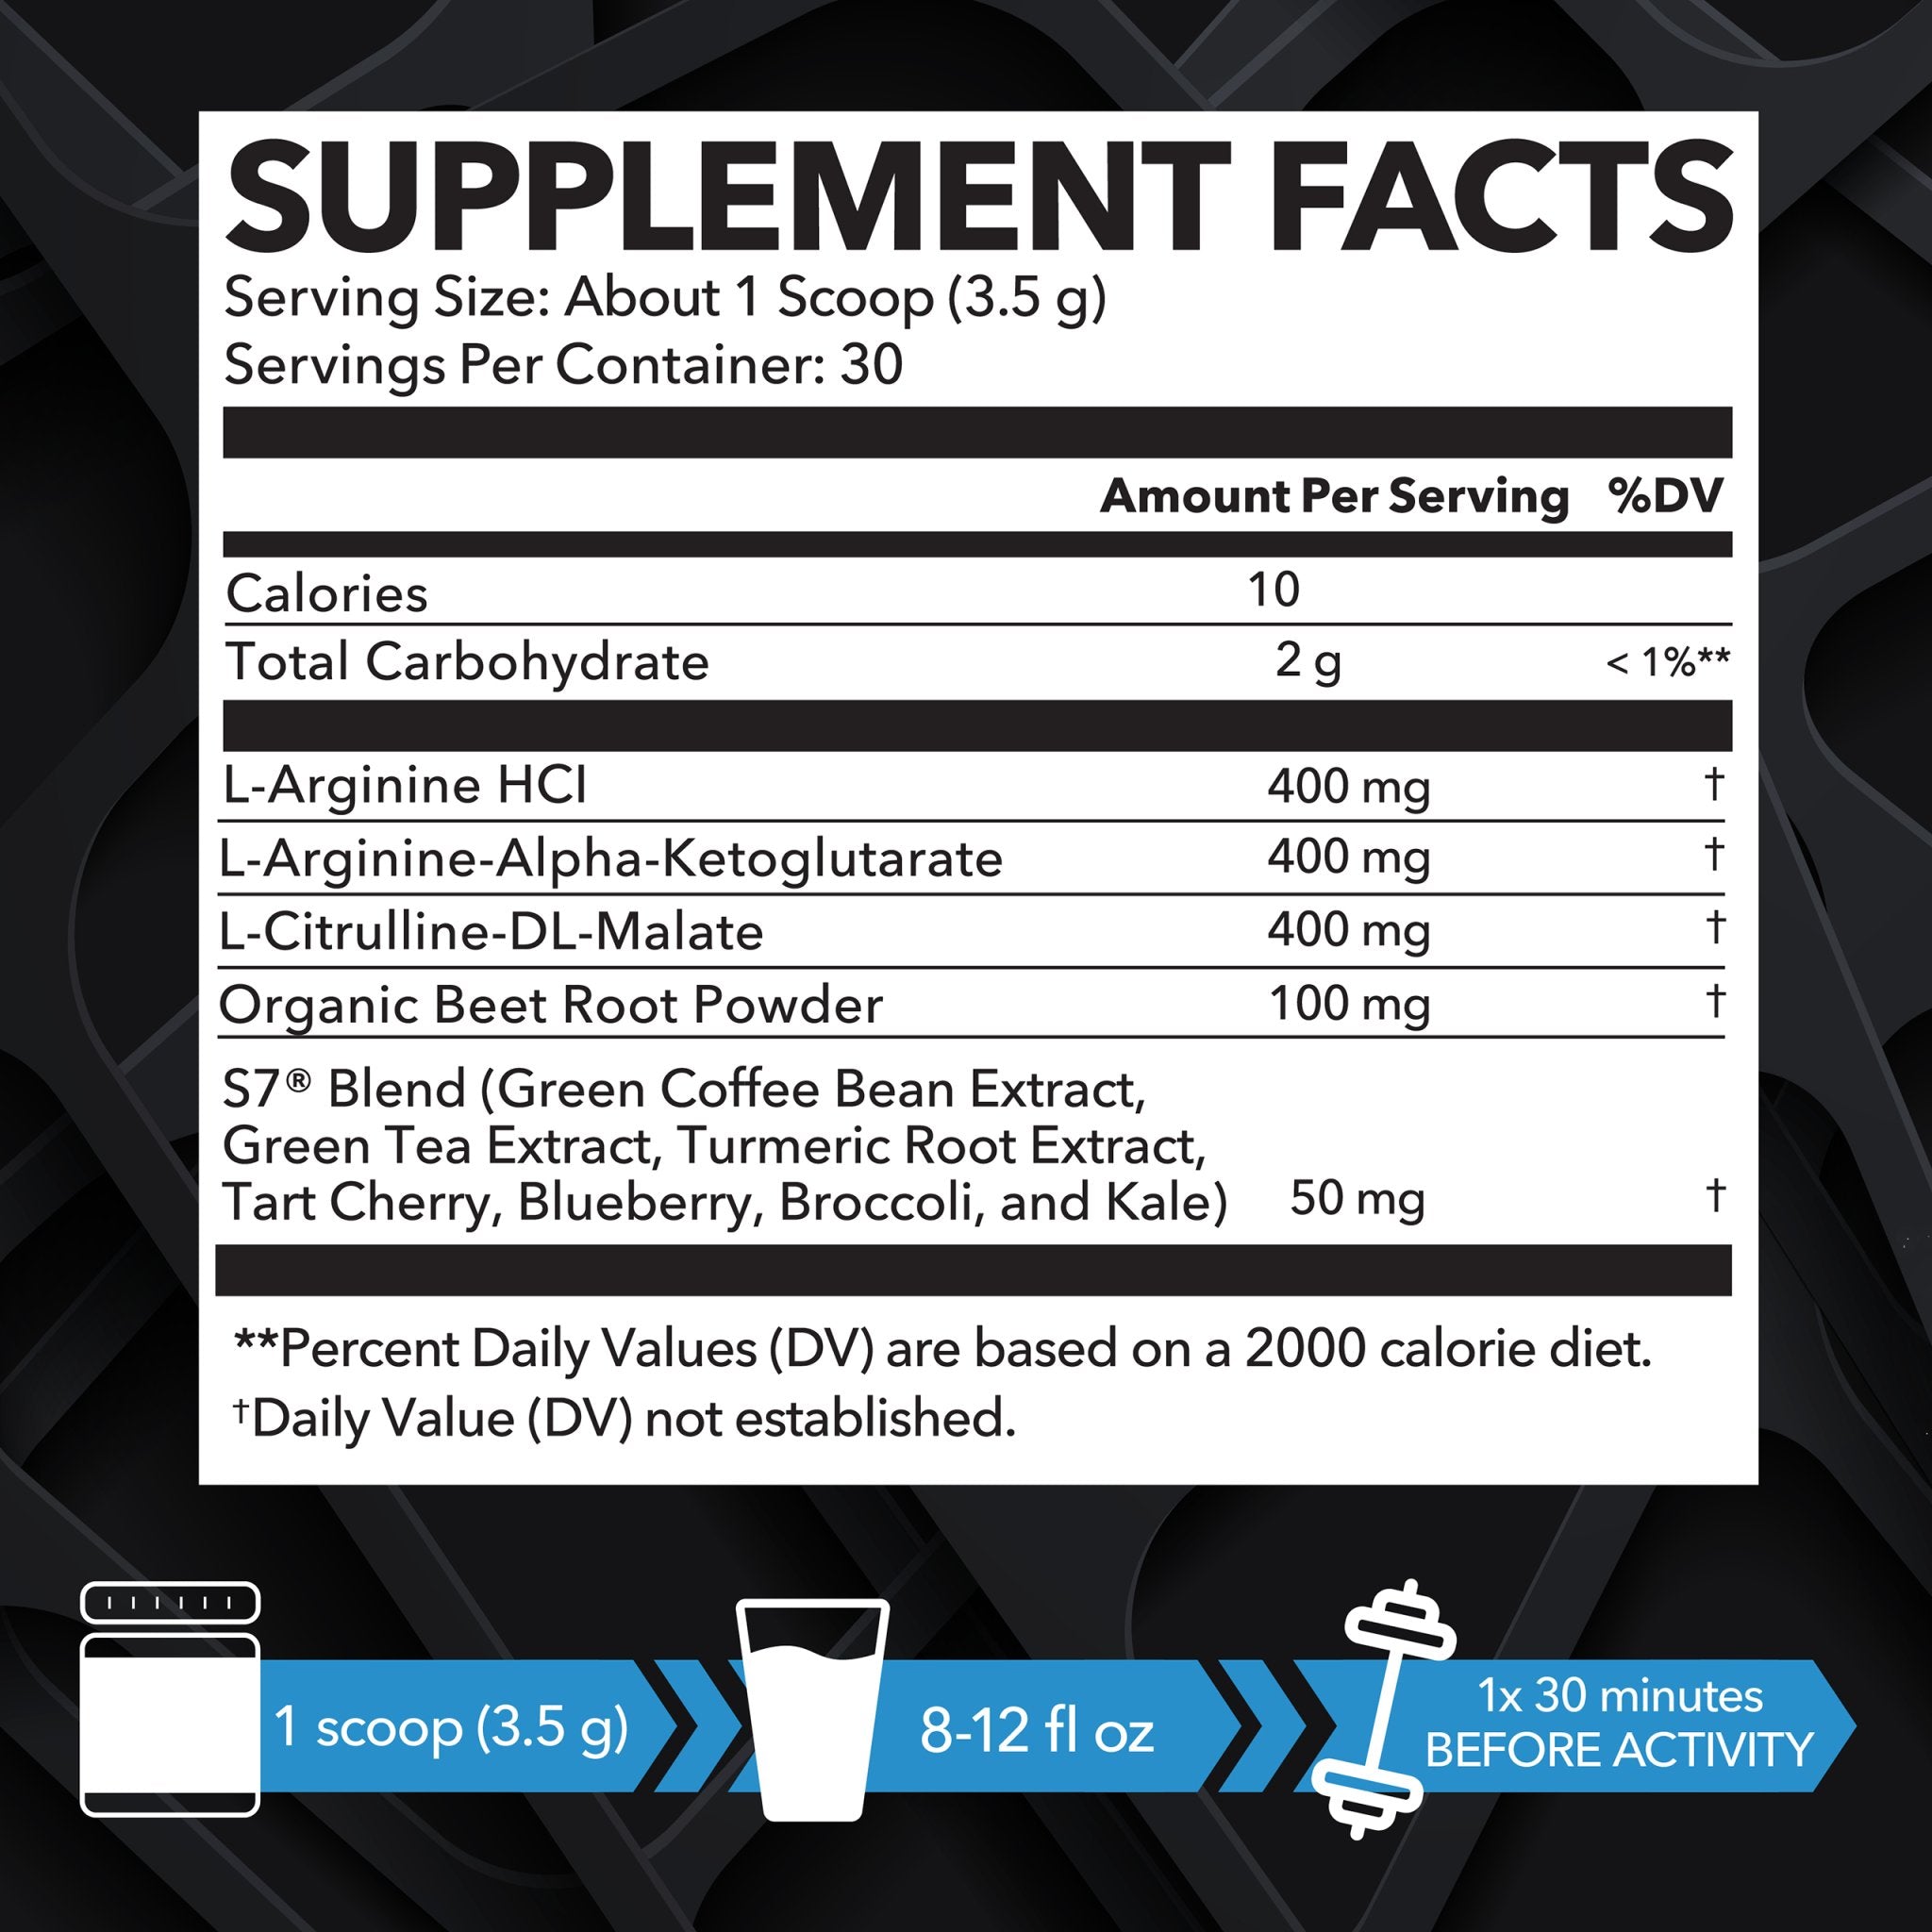 L-Arginine Powder, 3.7oz - Havasu Nutrition